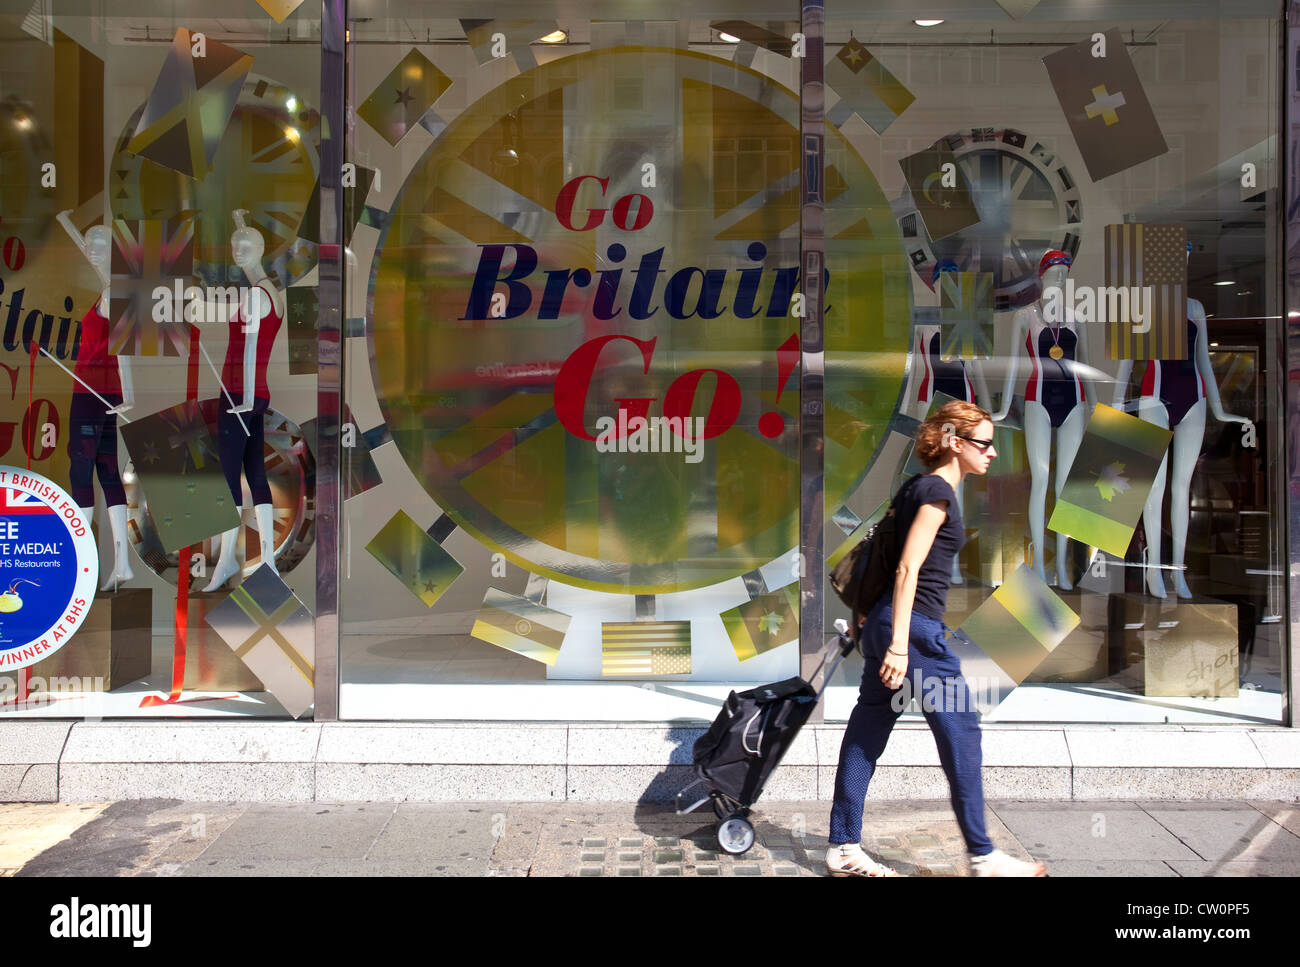 Go Britain Go sign in Debenhams department store shop window during the London Olympics 2012, Oxford Street, London, England, UK Stock Photo